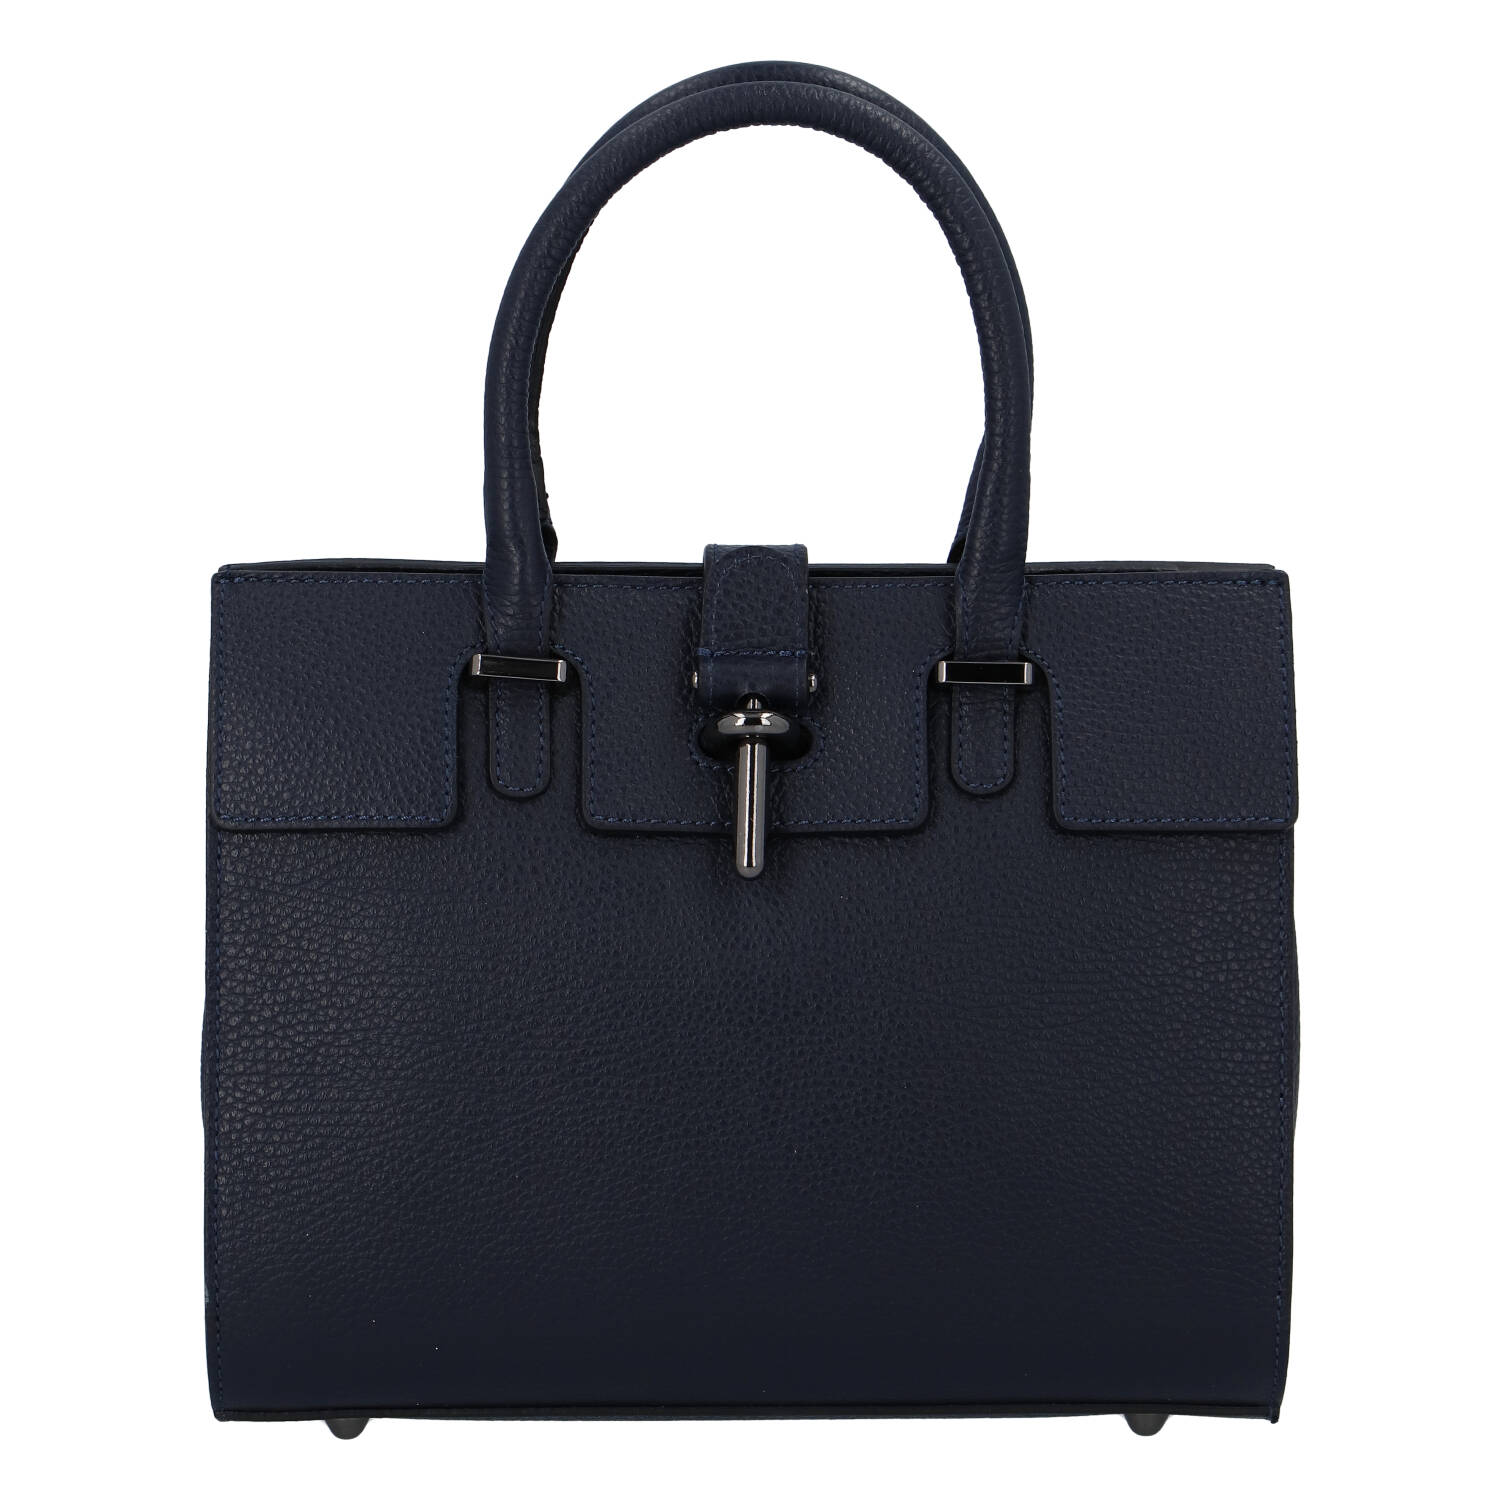 Luxusná dámska kabelka tmavo modrá - ItalY Spolicy